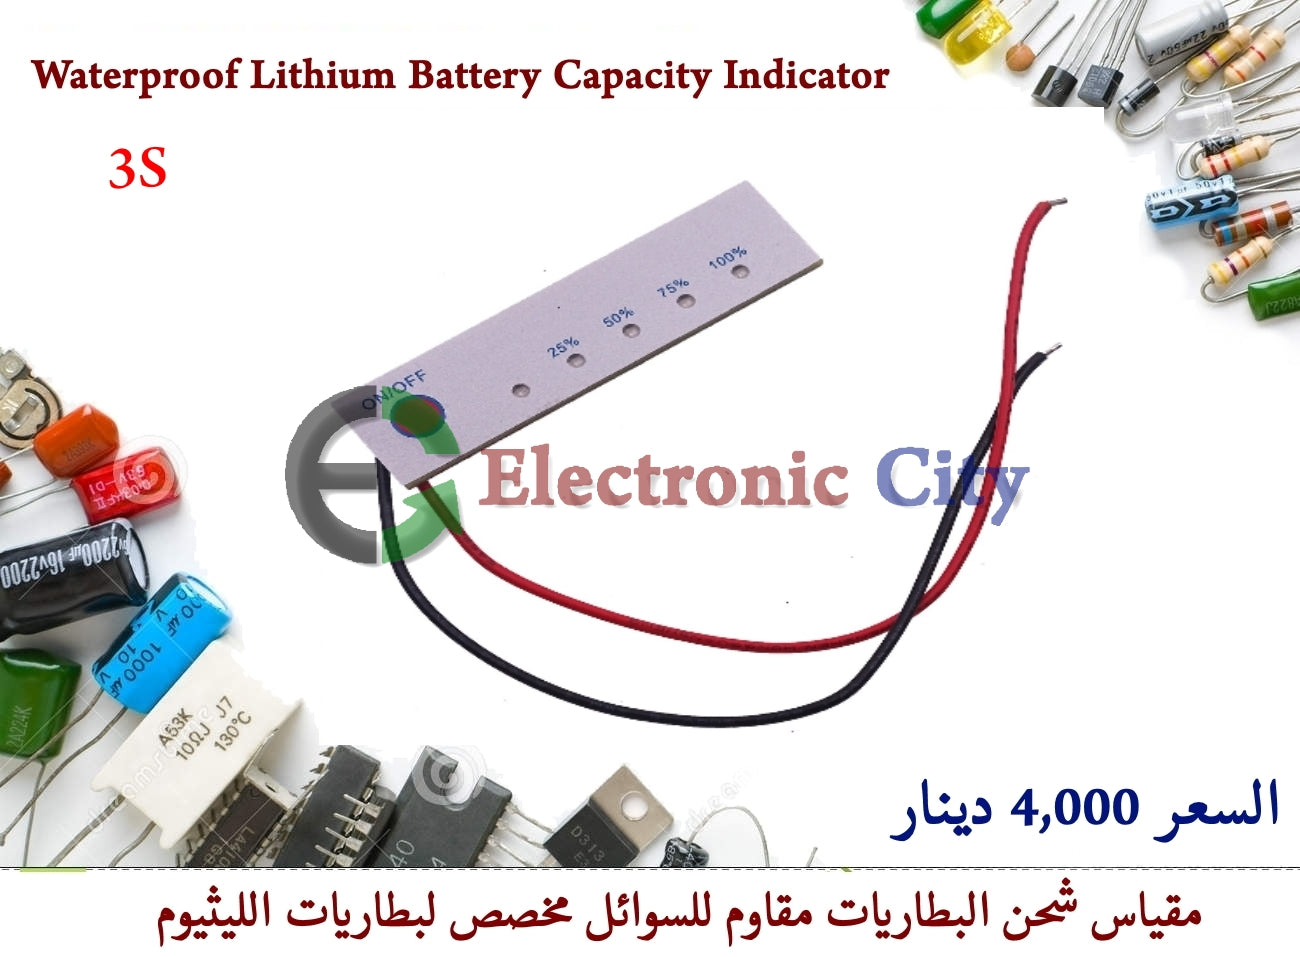 Waterproof Lithium Battery Capacity Indicator 3S #F3 010714